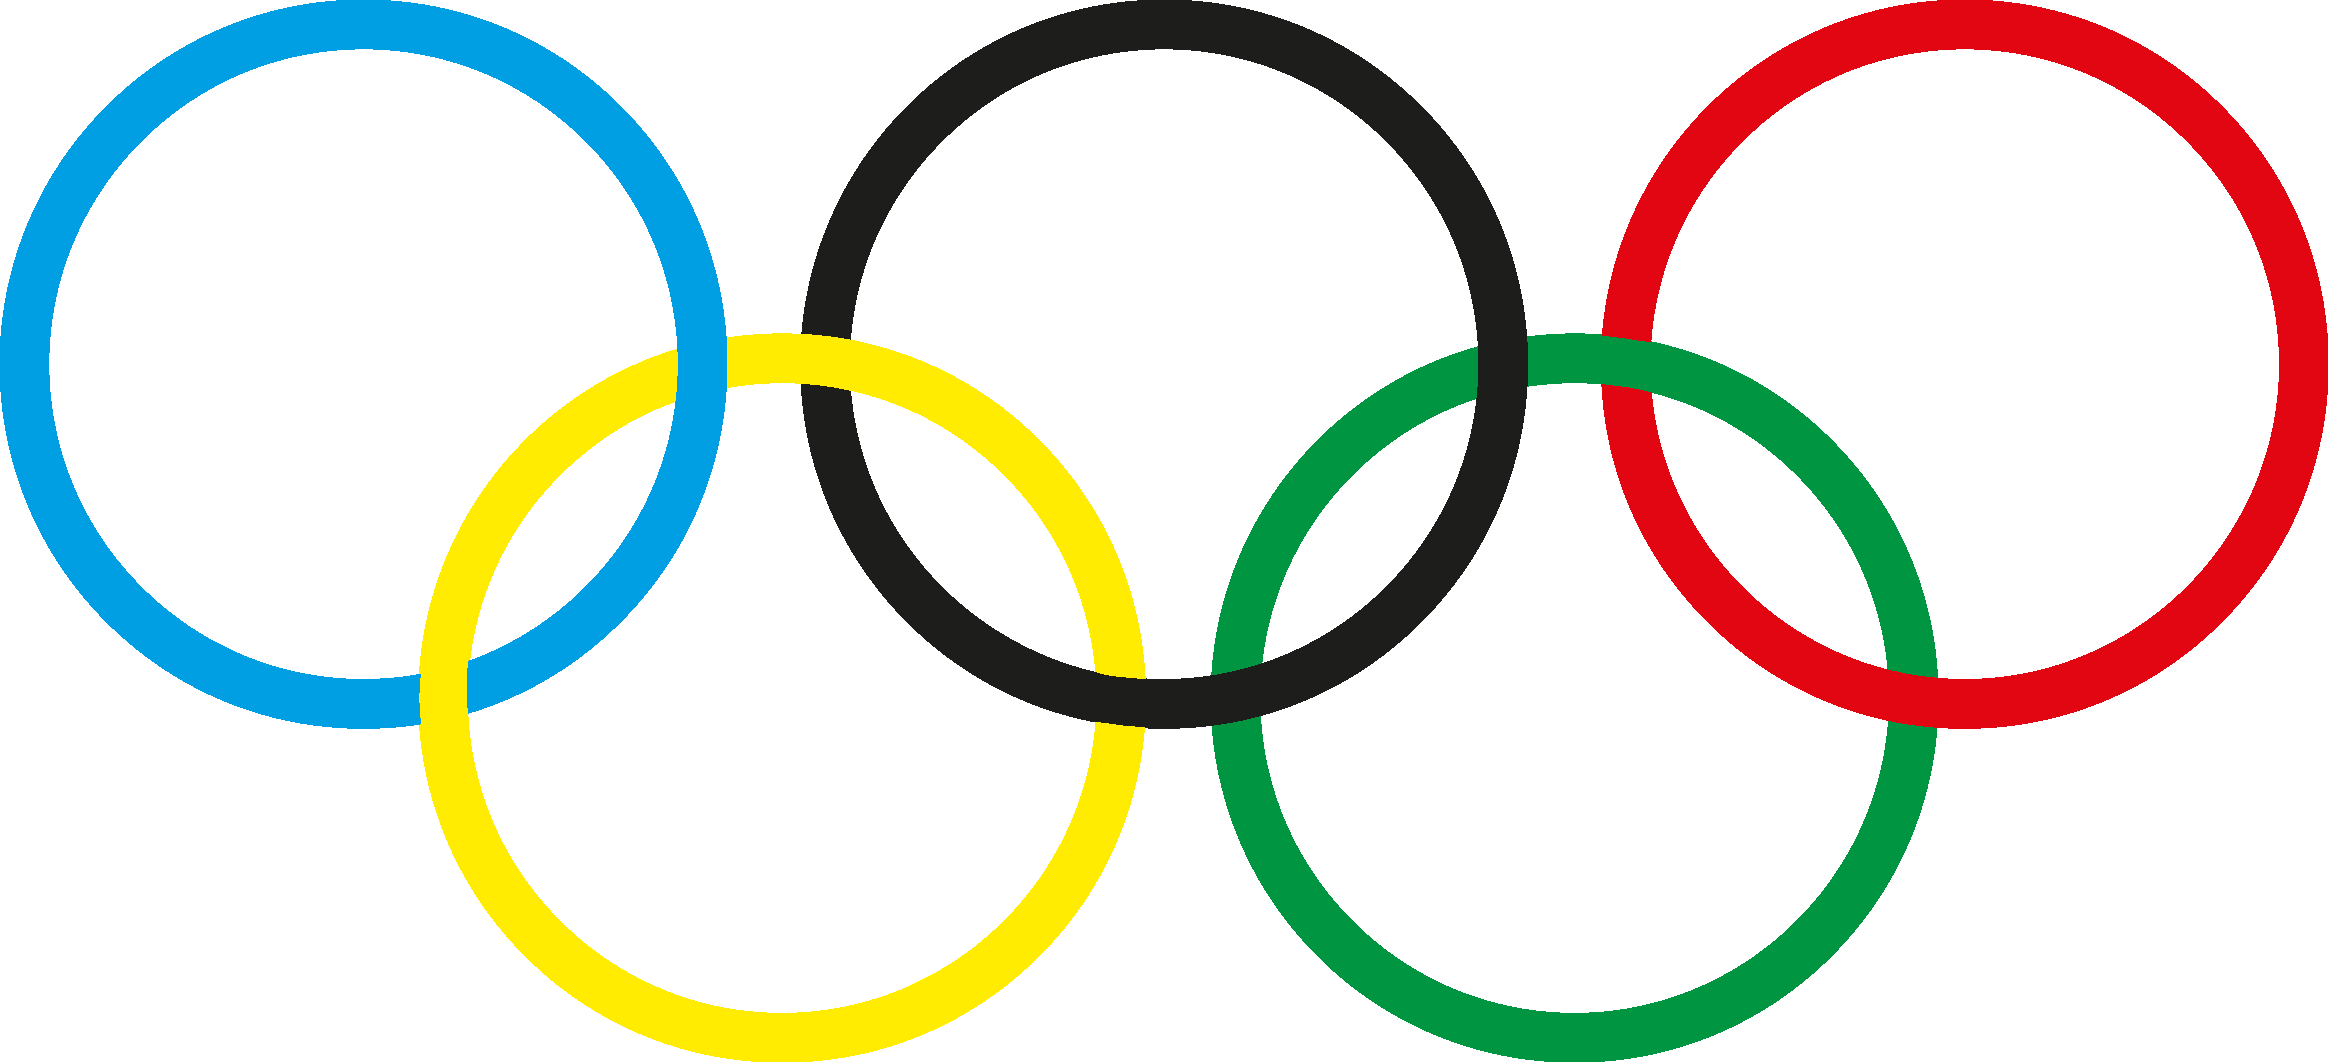 Olympics Logo PNG HD Image